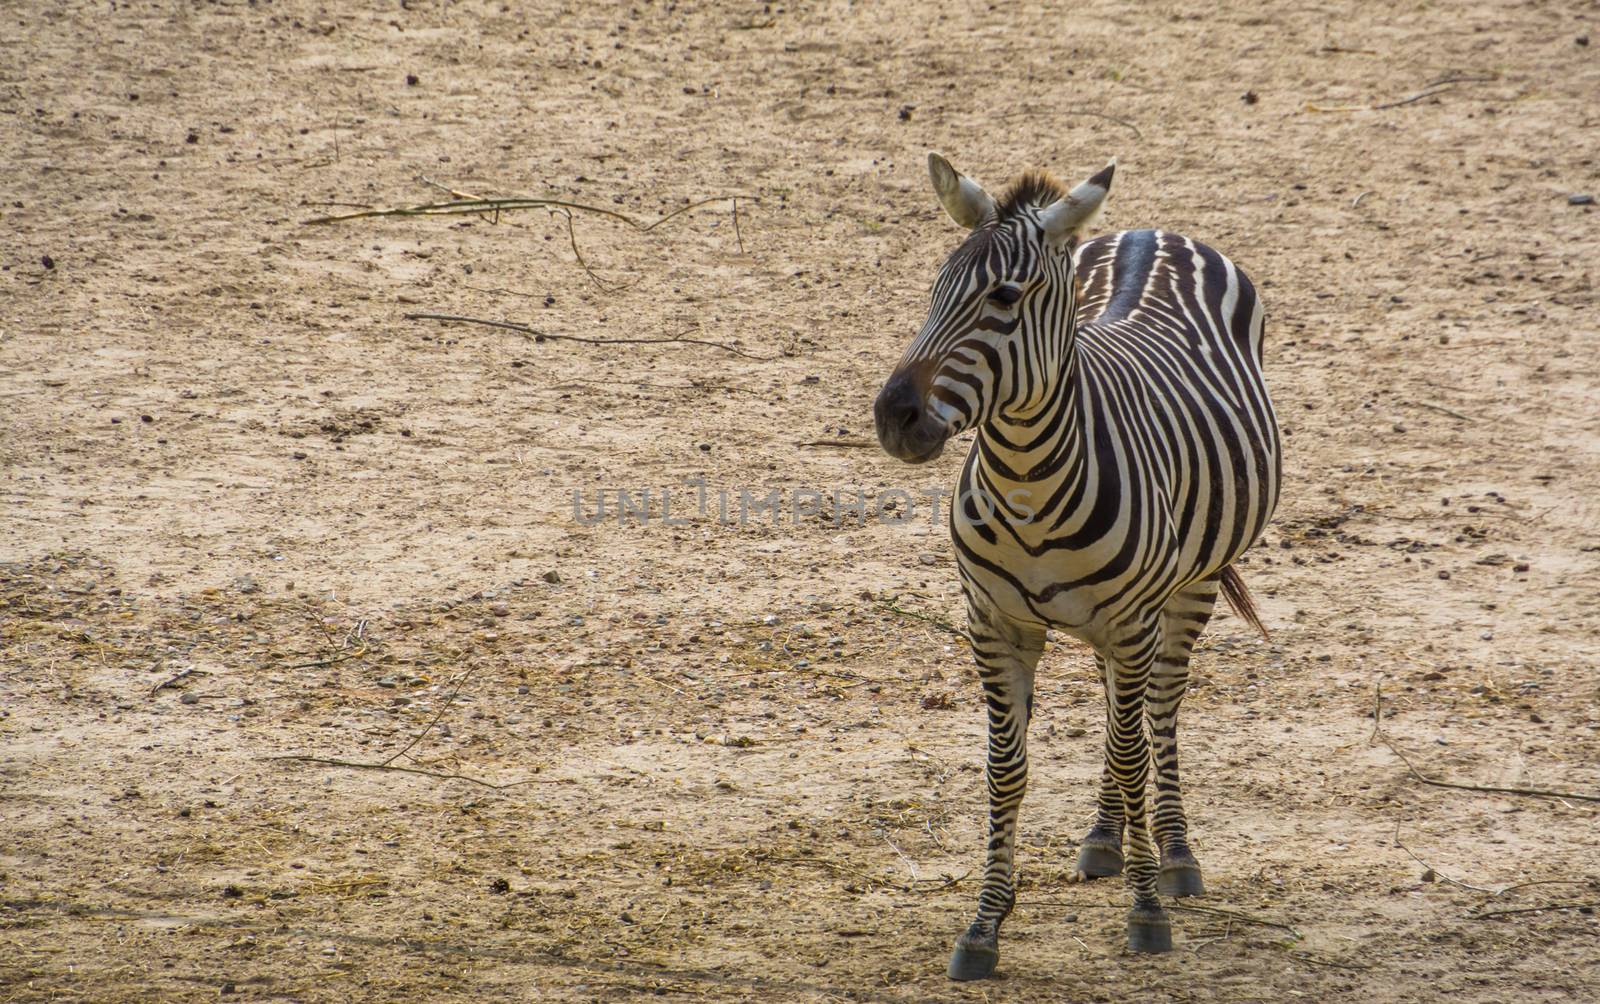 portrait of a grant's zebra in closeup, tropical wild horse specie from Africa